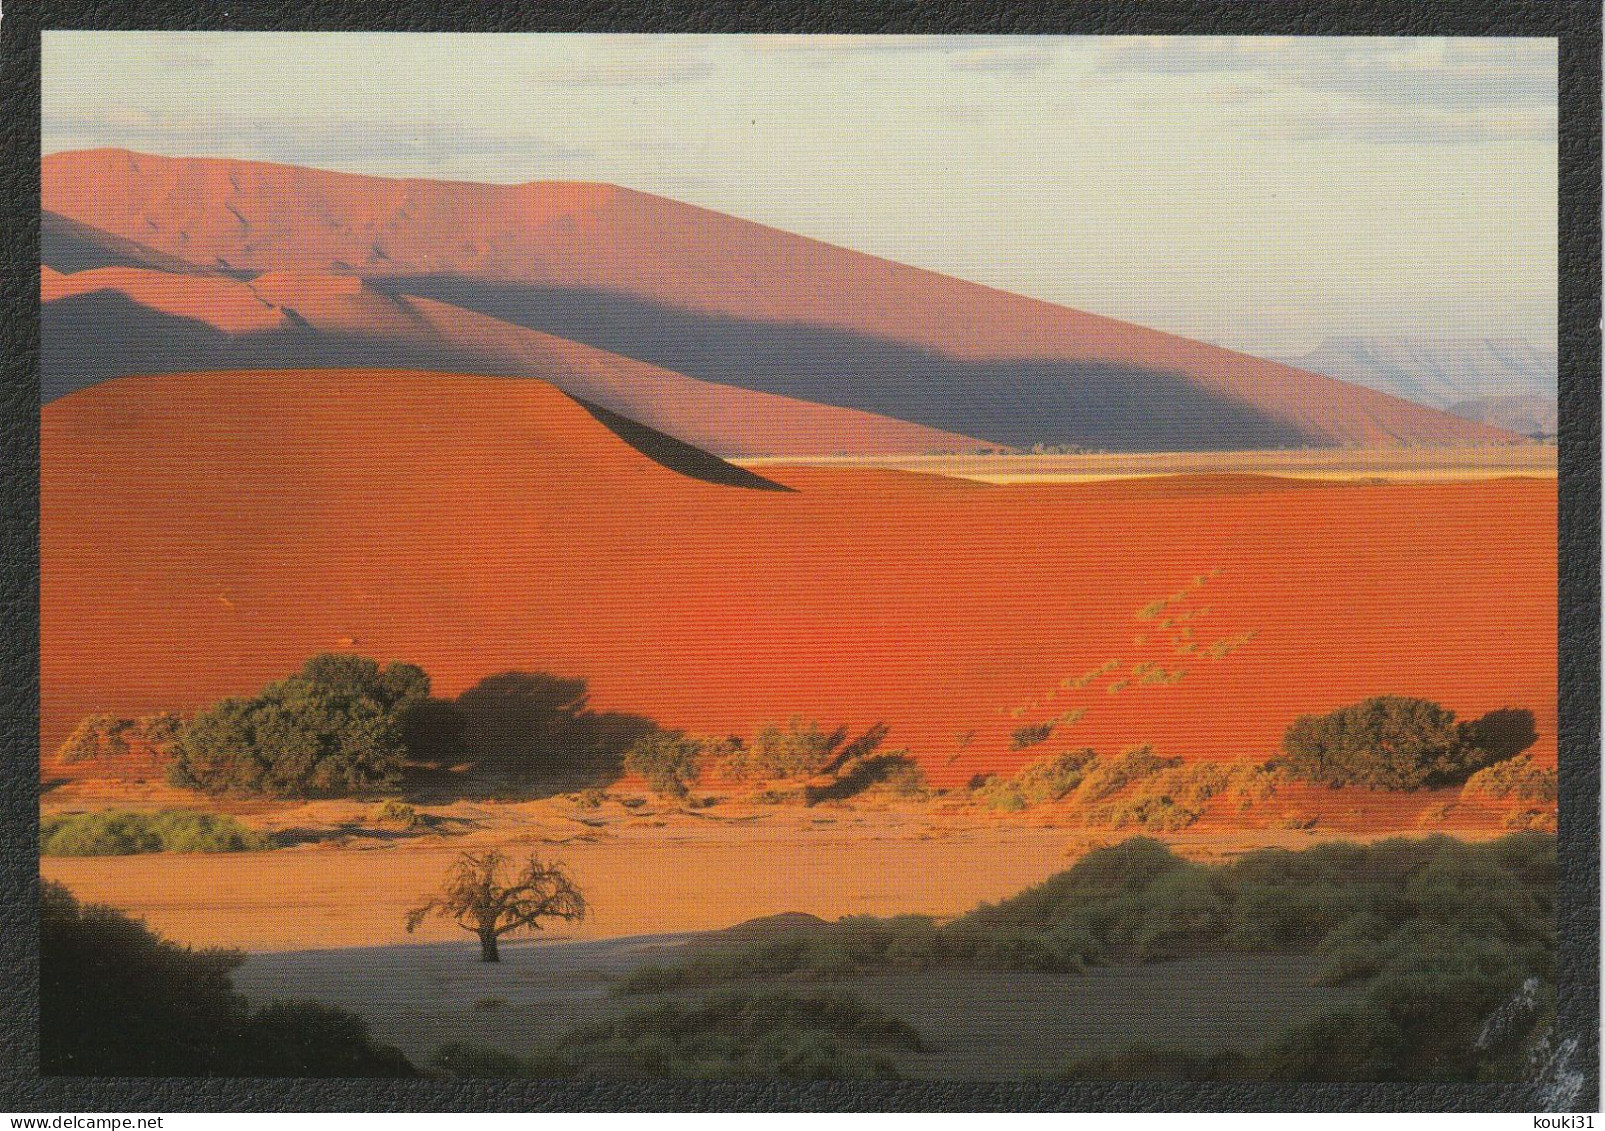 Dunes De Sossuvlei - Namibia